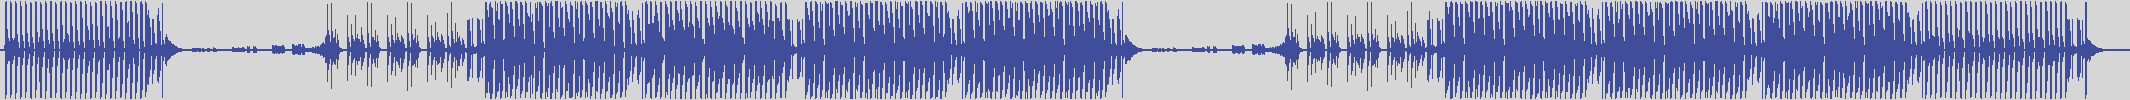 nf_boyz_records [NFY031] D Troit Traxx - Long Time Ago [5th Avenue Mix] audio wave form